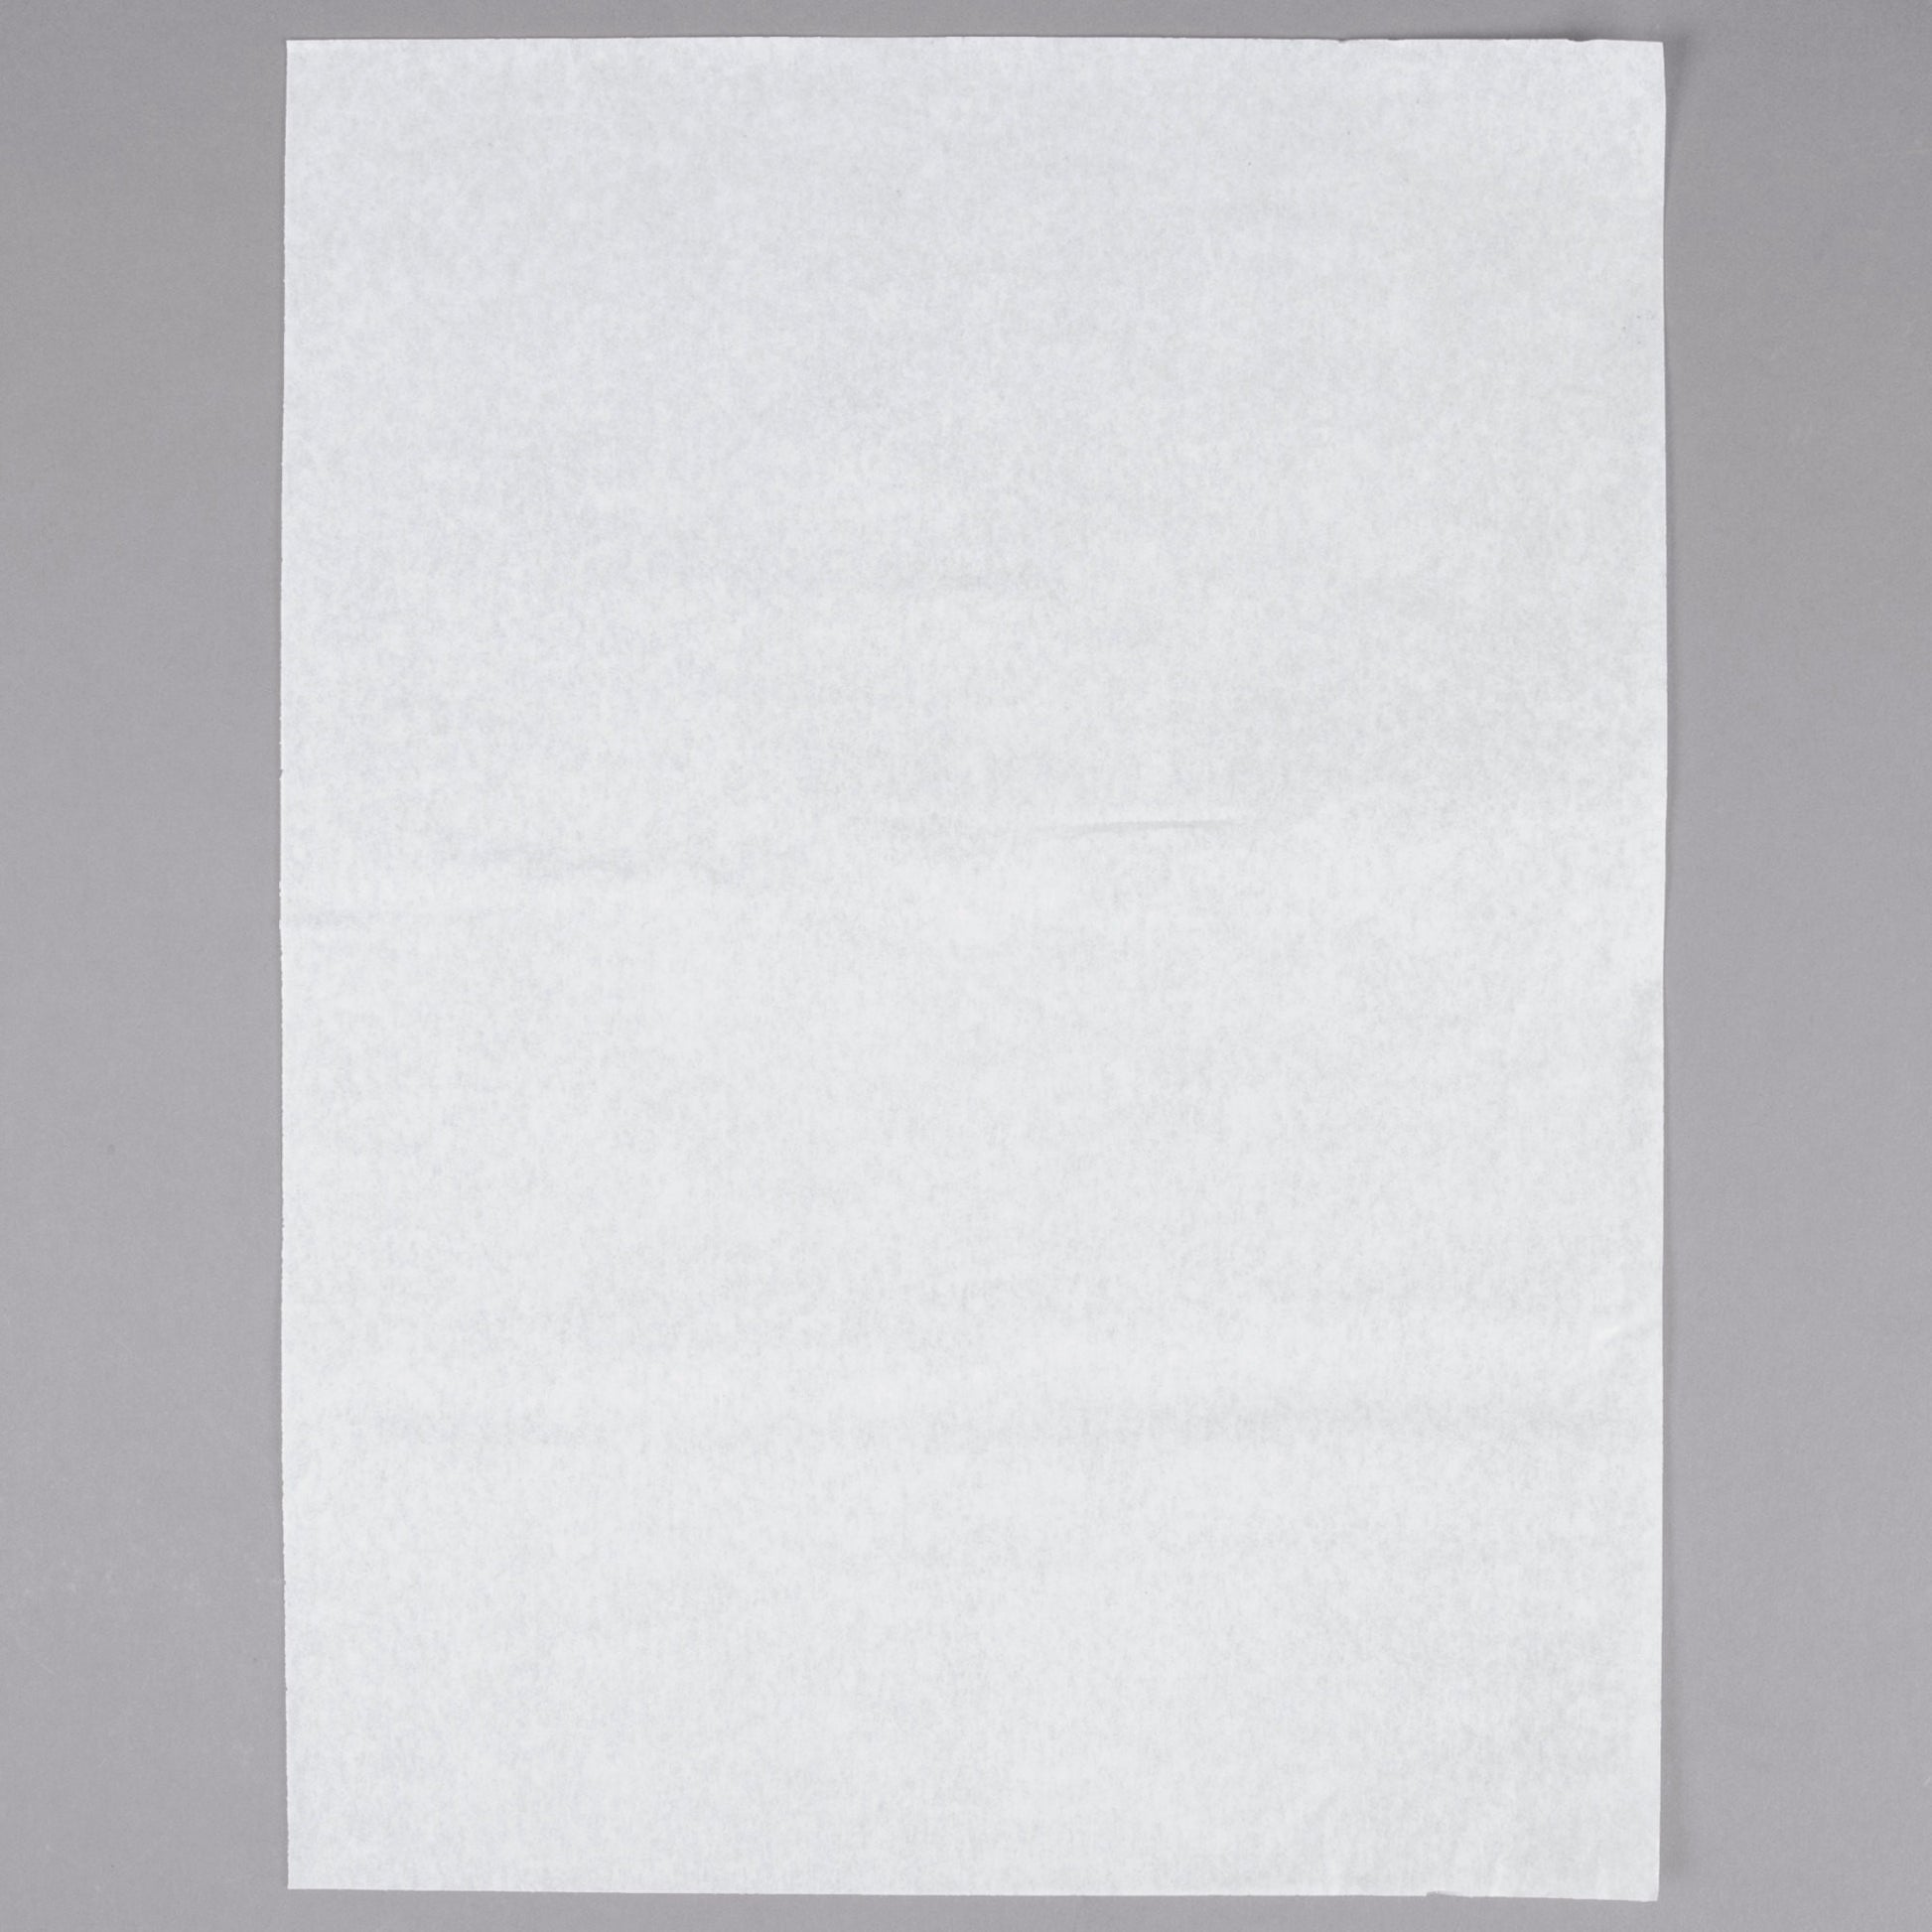 Unbleached 12x16 Parchment Paper Sheets - Perfect Fit for Half